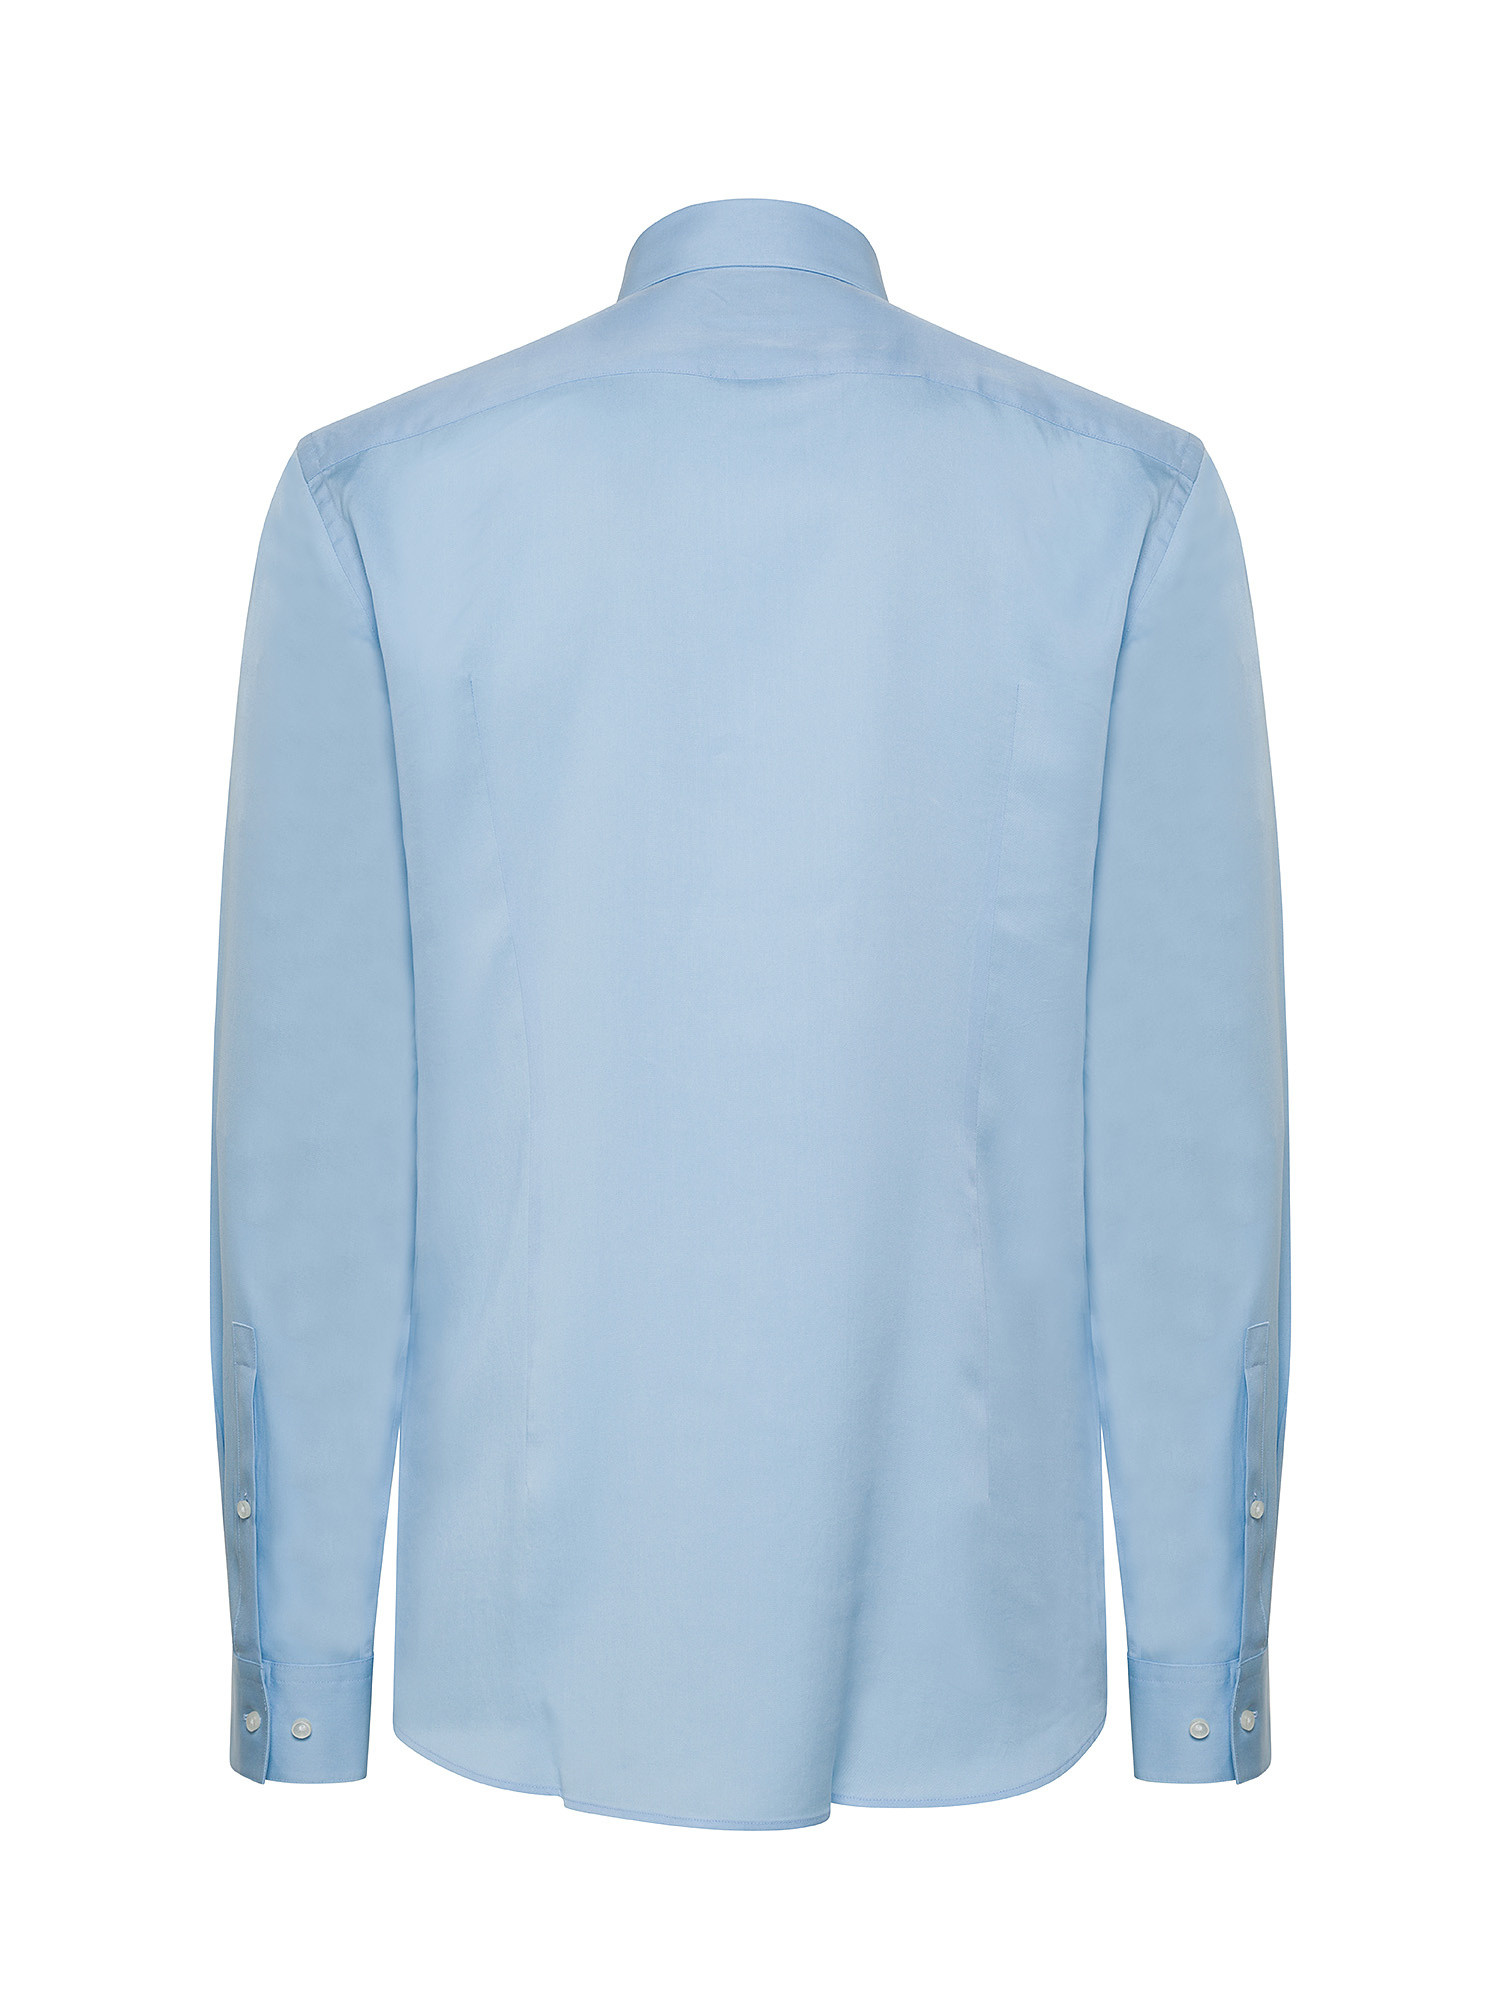 Hugo - Camicia slim fit, Azzurro, large image number 2